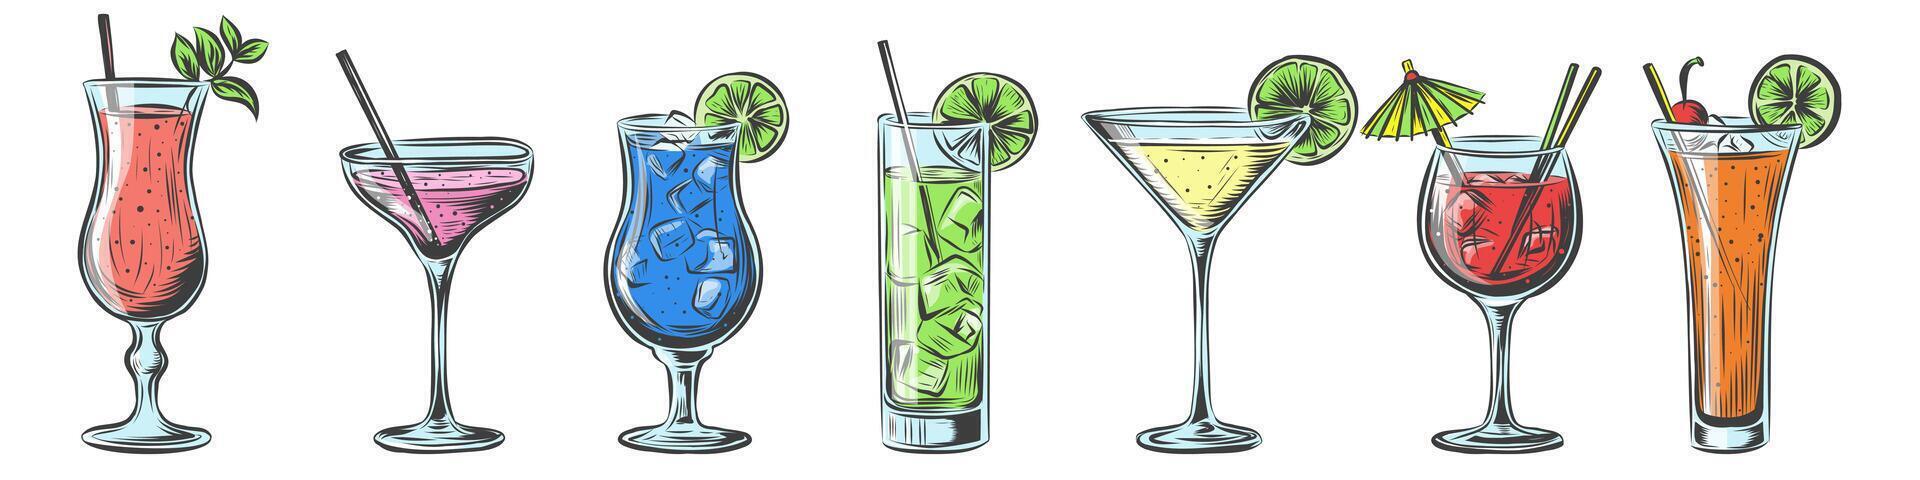 alkoholhaltig cocktails hand dragen samling. årgång cocktails uppsättning vektor illustration isolerat på vit bakgrund. meny design element. alkoholhaltig drycker uppsättning.